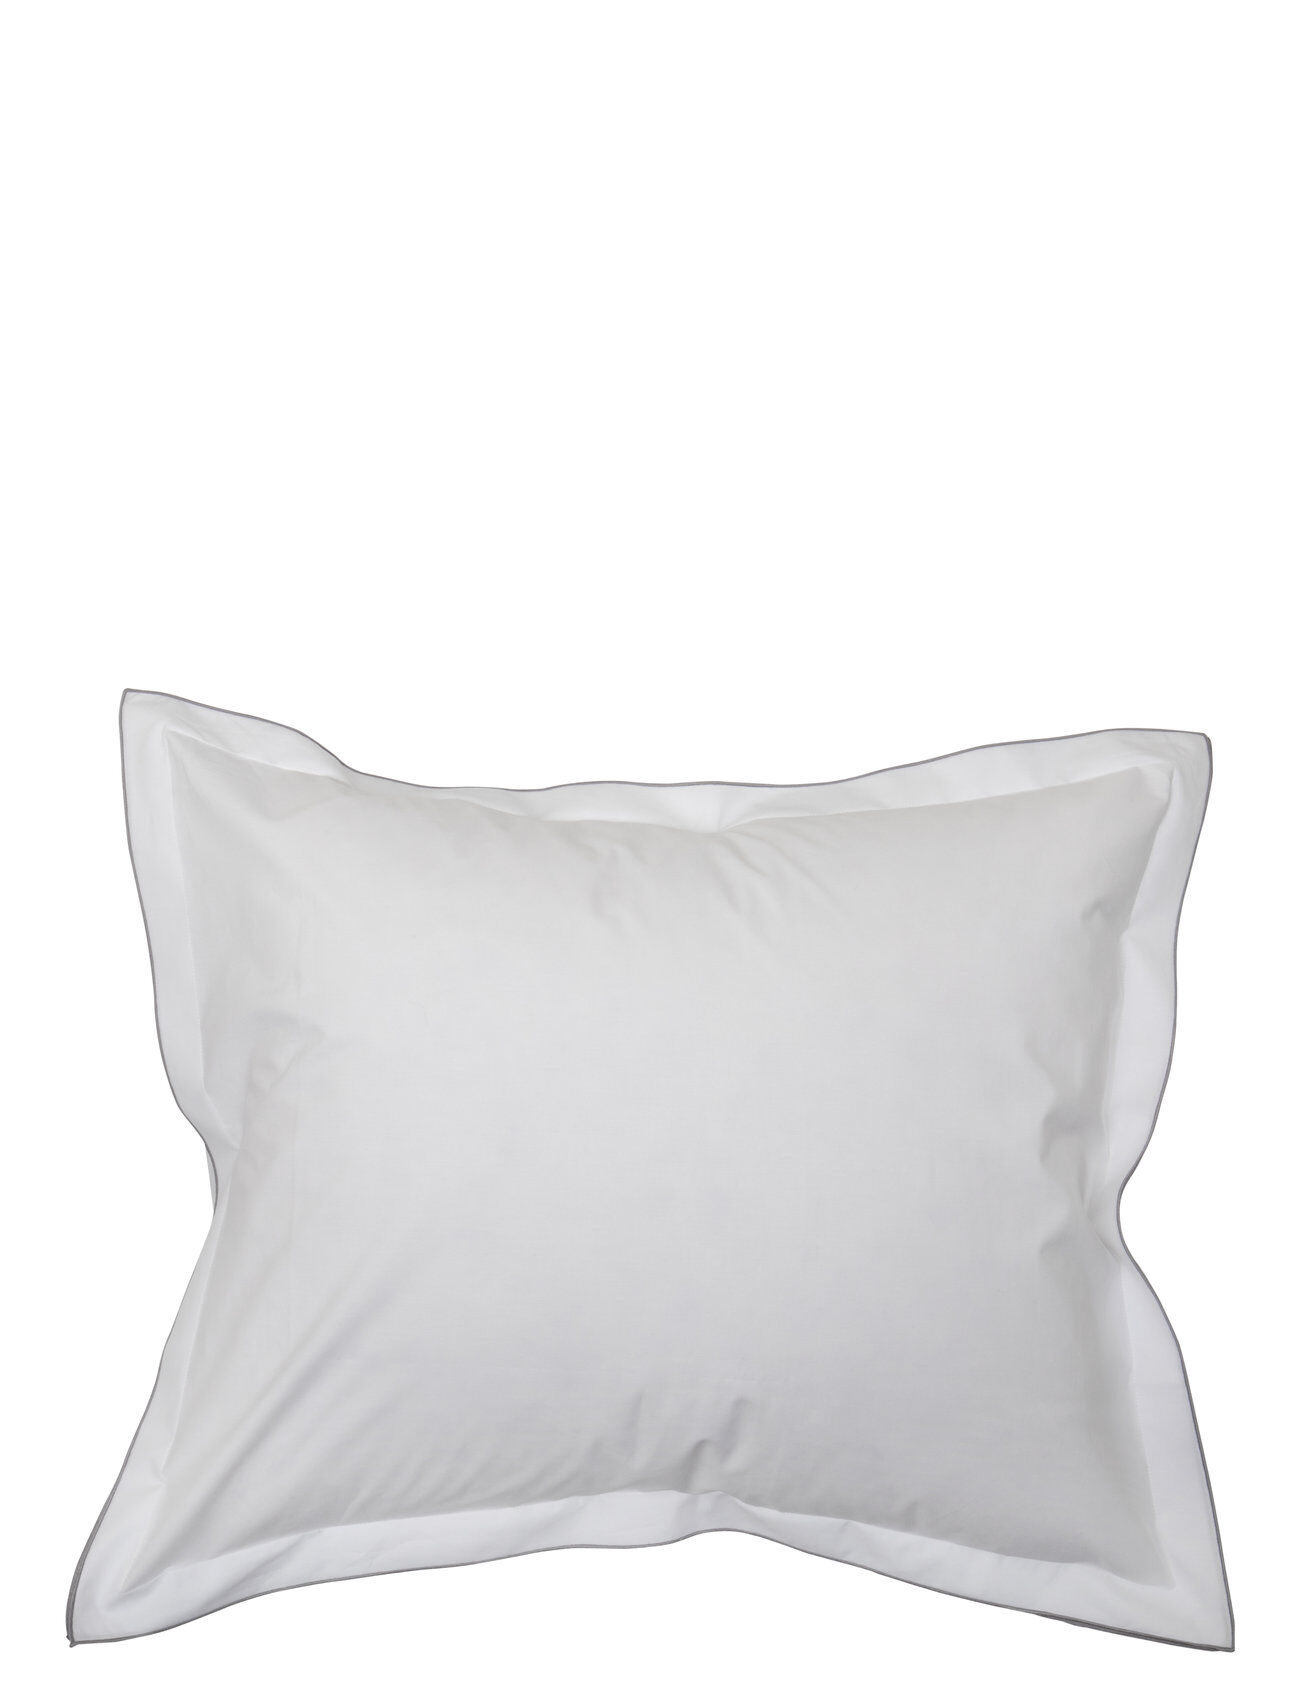 Mille Notti Volare Pillow Case Home Textiles Bedtextiles Pillow Cases Grå Mille Notti